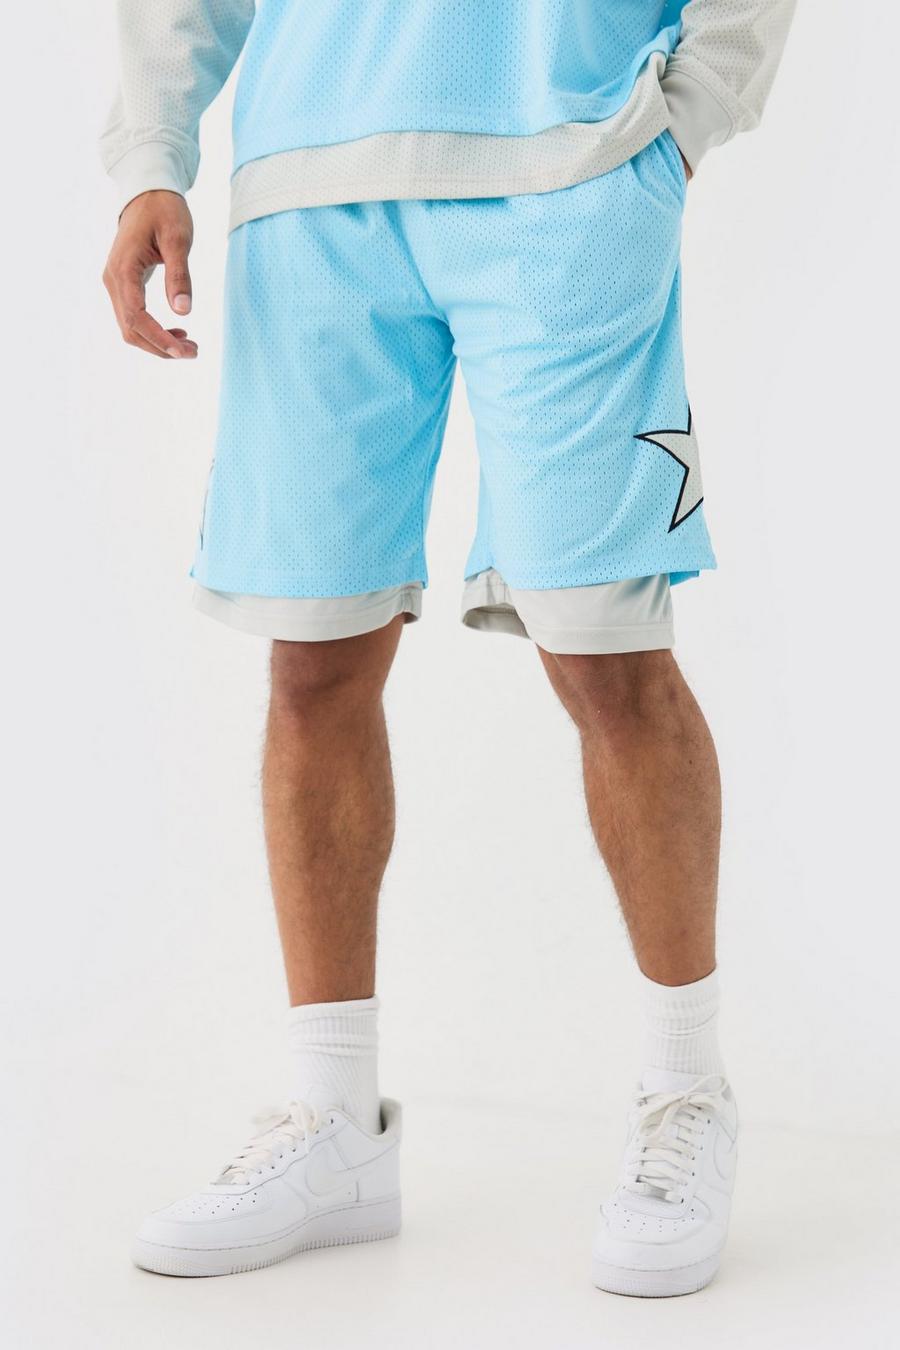 Pantalón corto holgado largo de malla a capas estilo baloncesto, Blue